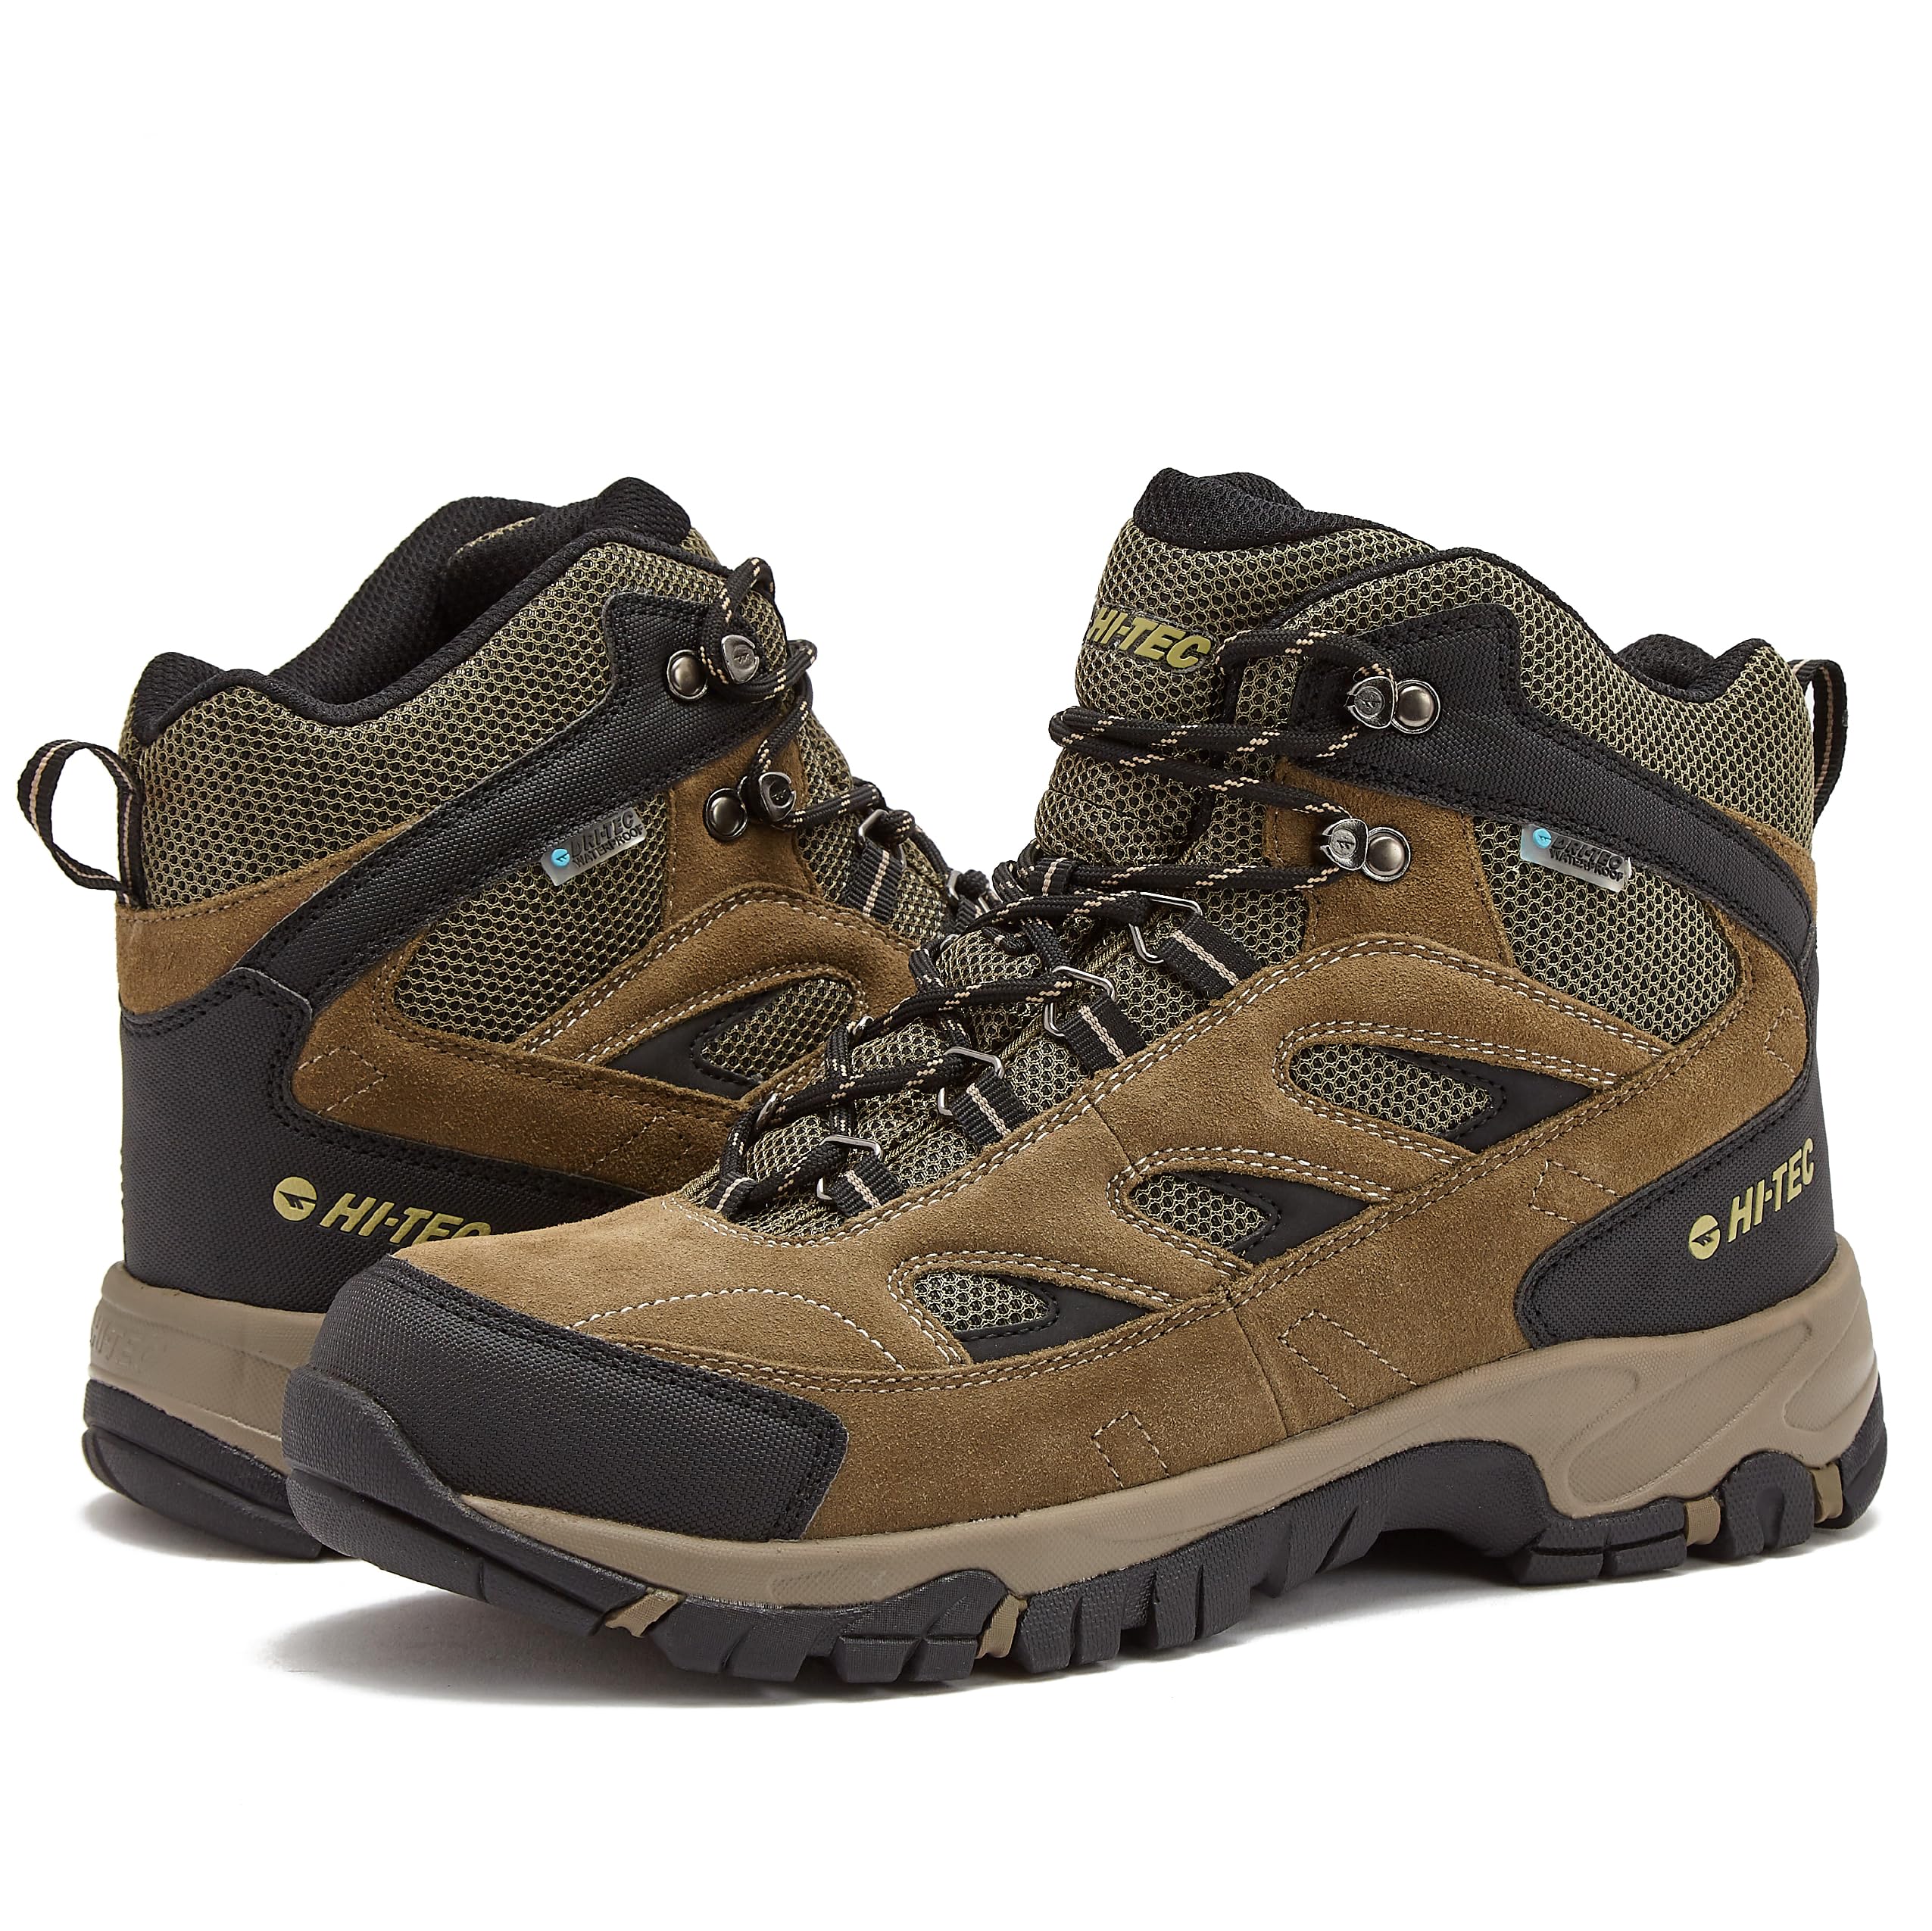 HI-TEC Yosemite WP Mid Waterproof Hiking Boots for Men, Lightweight Breathable Outdoor Trekking Shoes